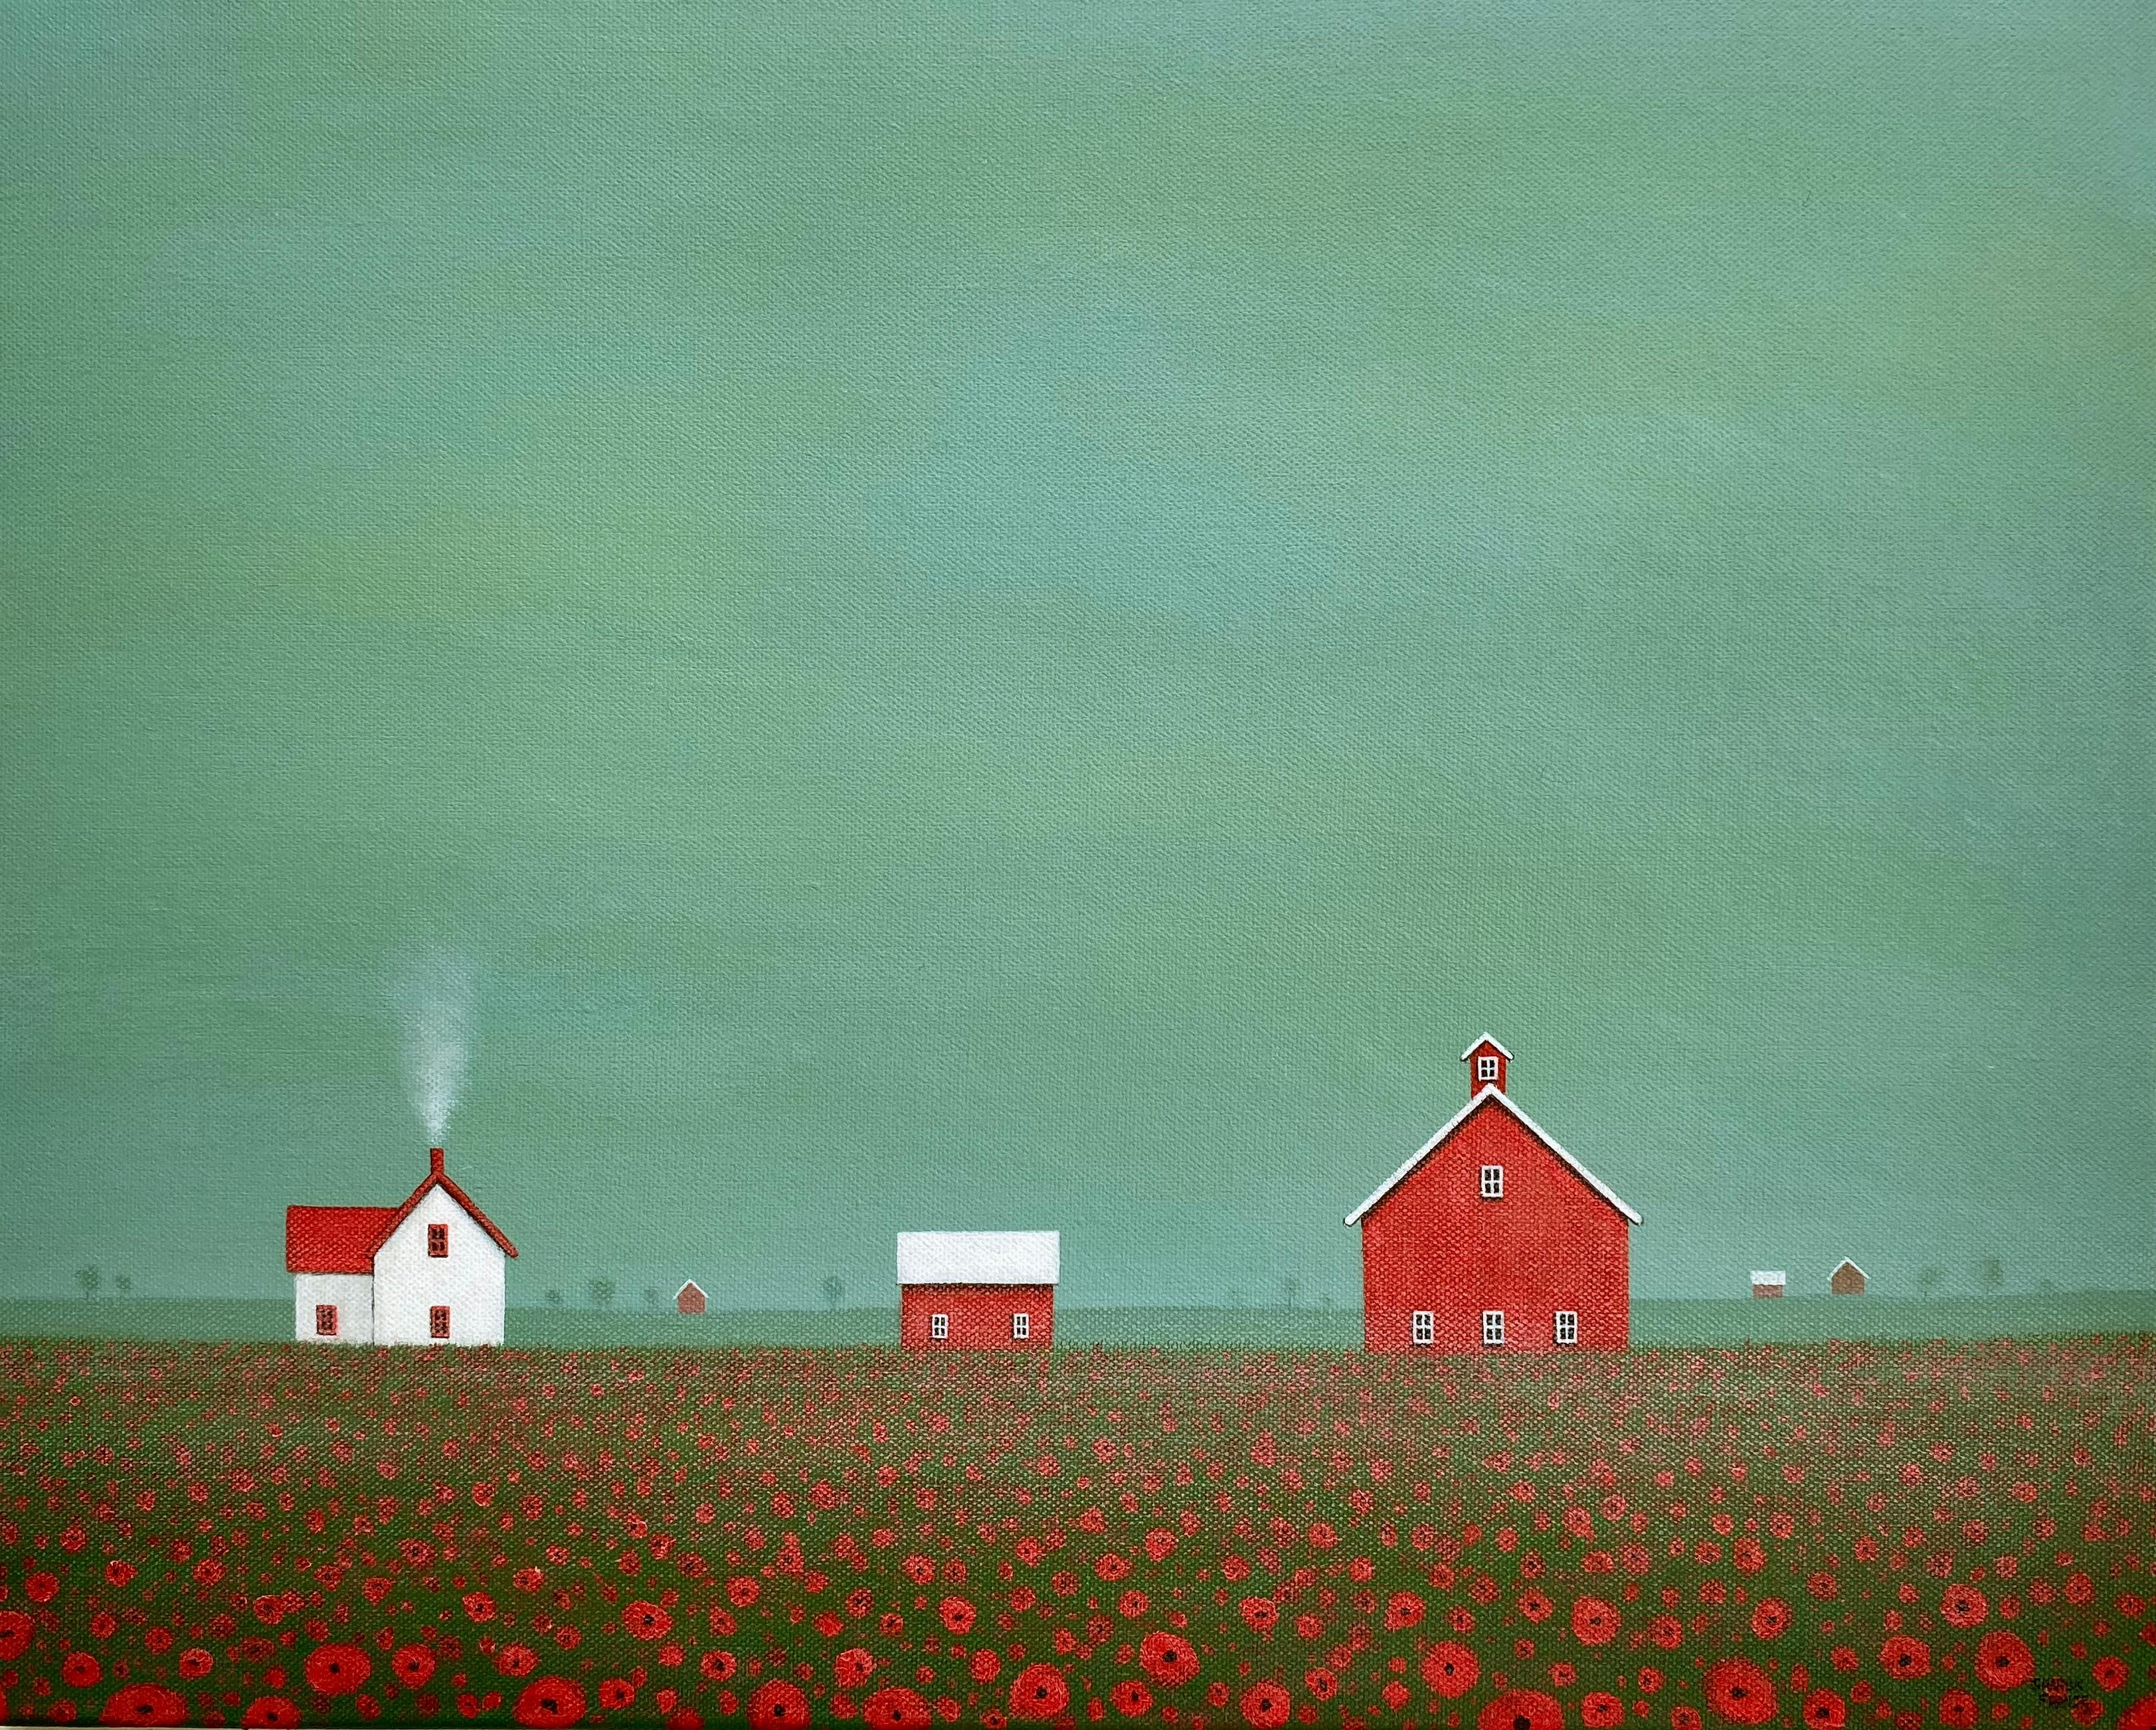 Overcast Sky Over the Poppy Farm, Original Painting